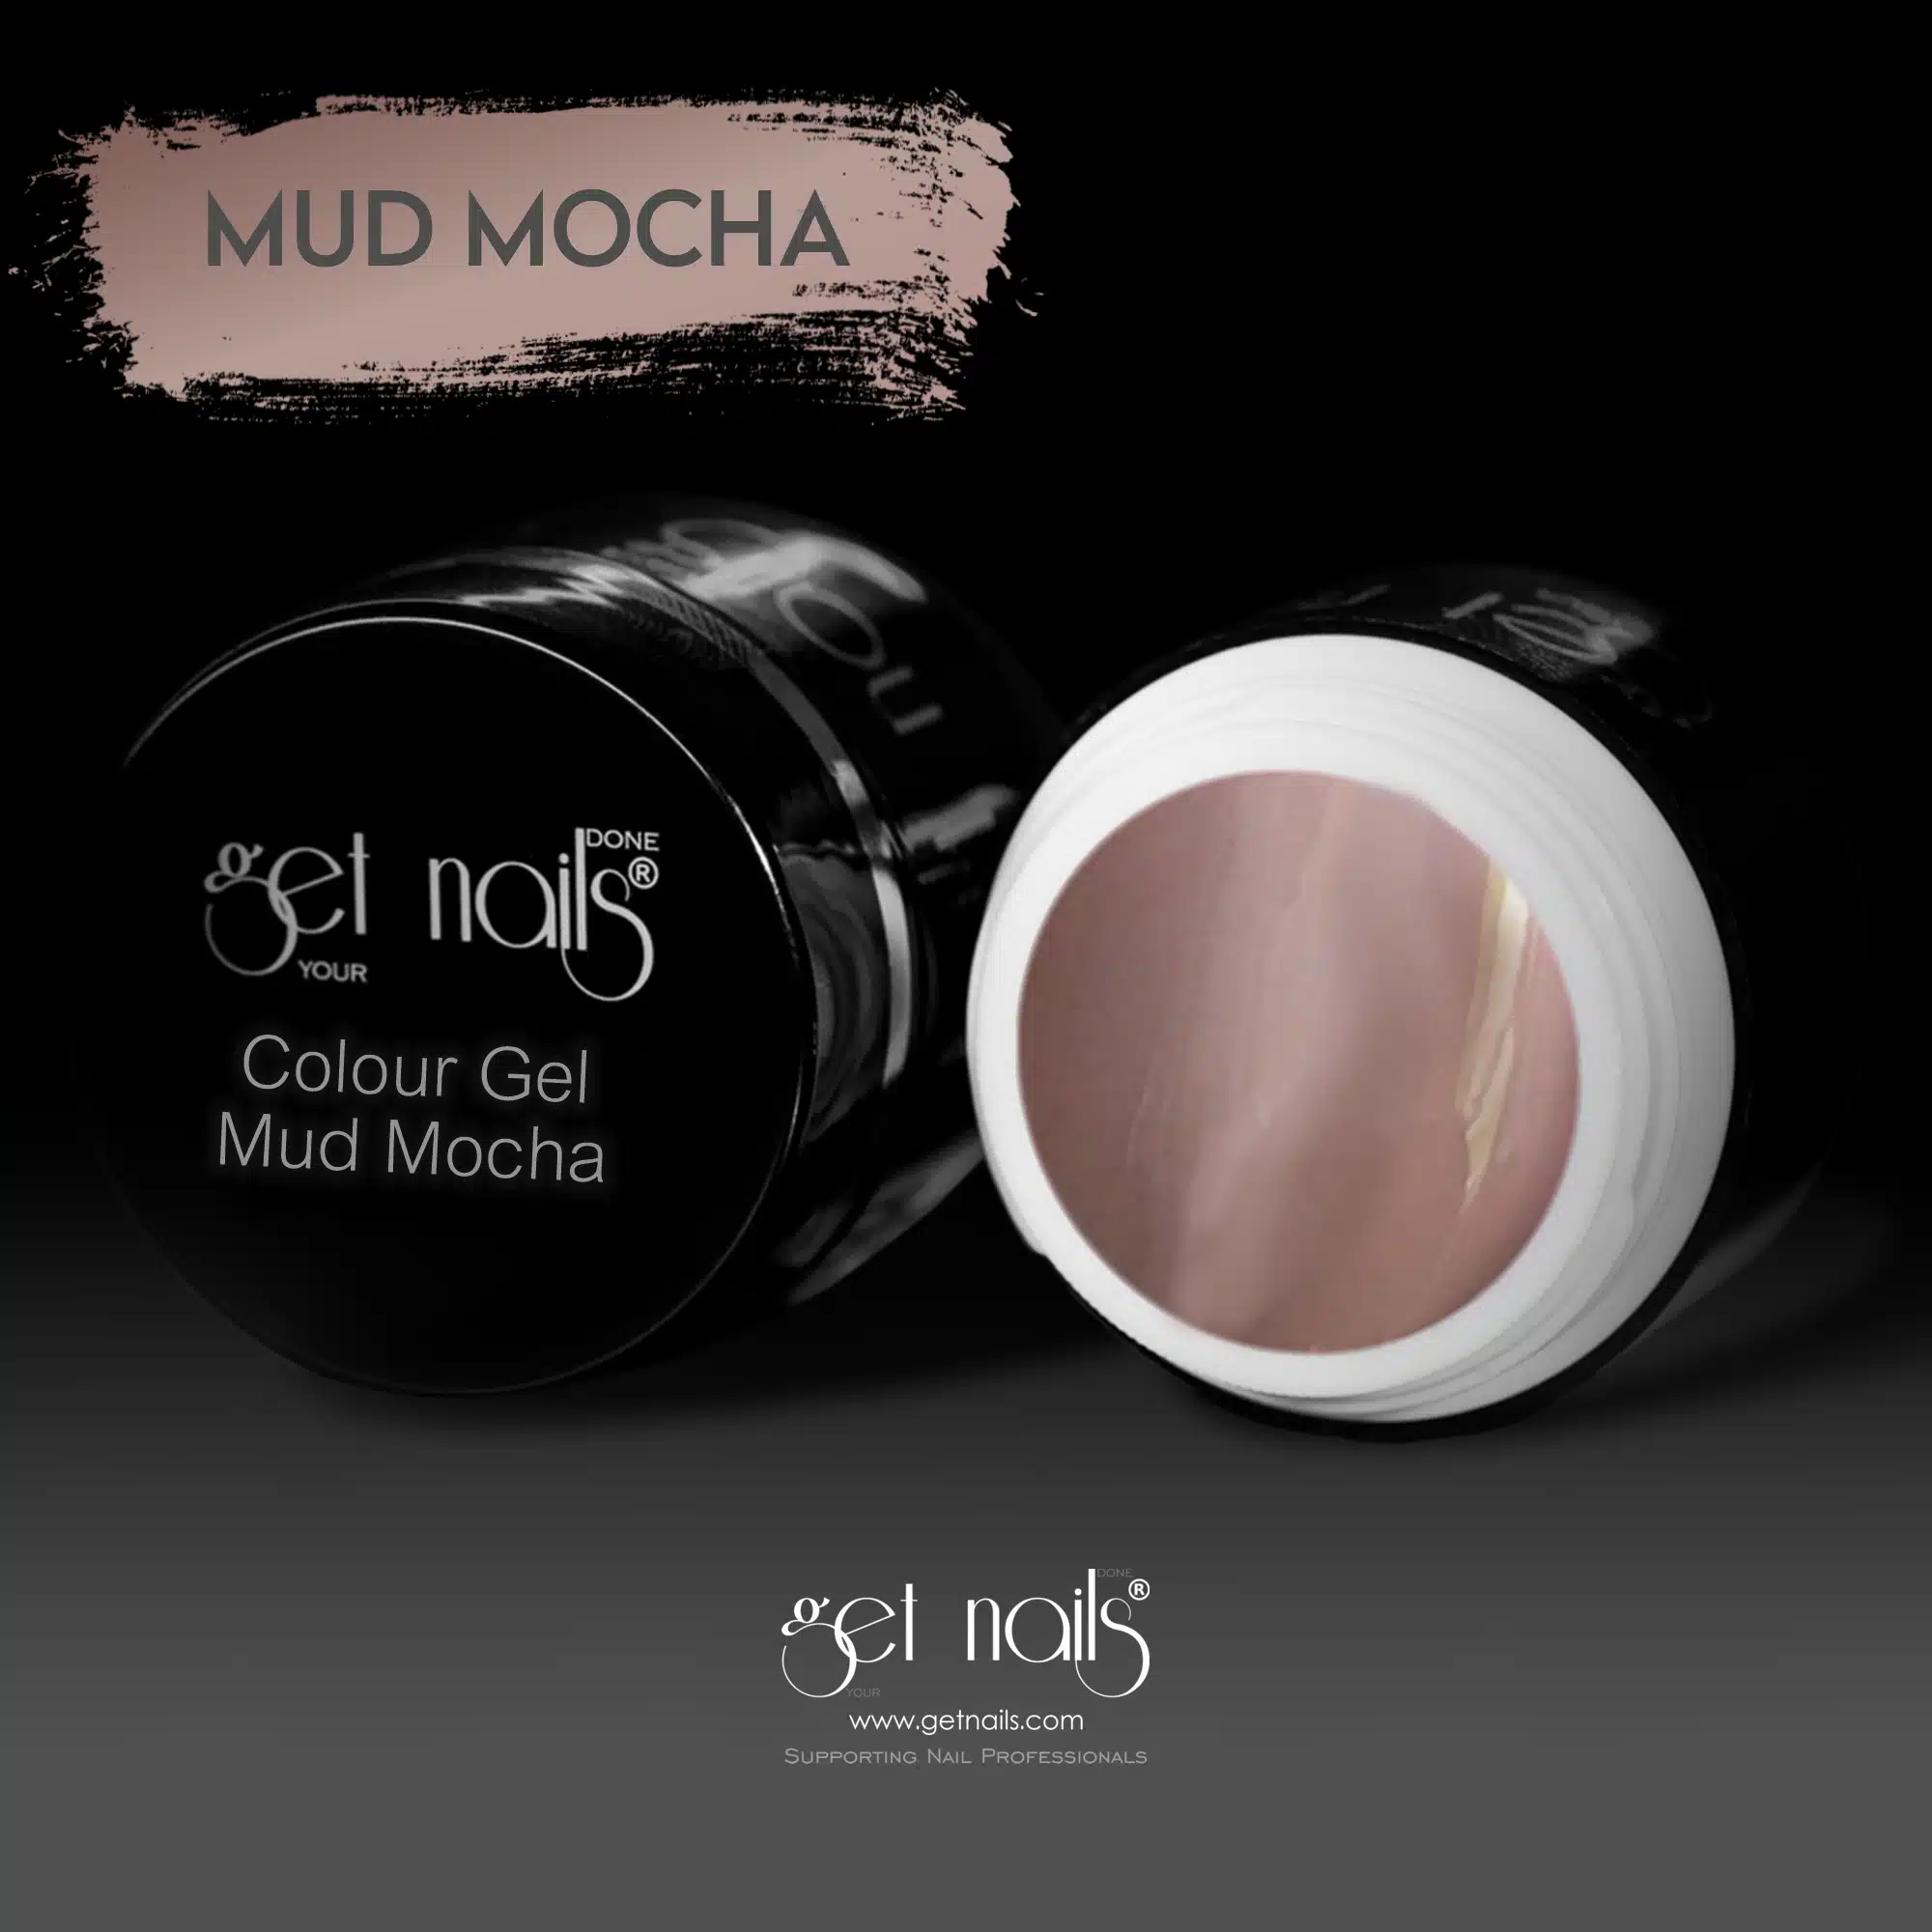 Get Nails Austria - Colour Gel Mud Mocha 5g